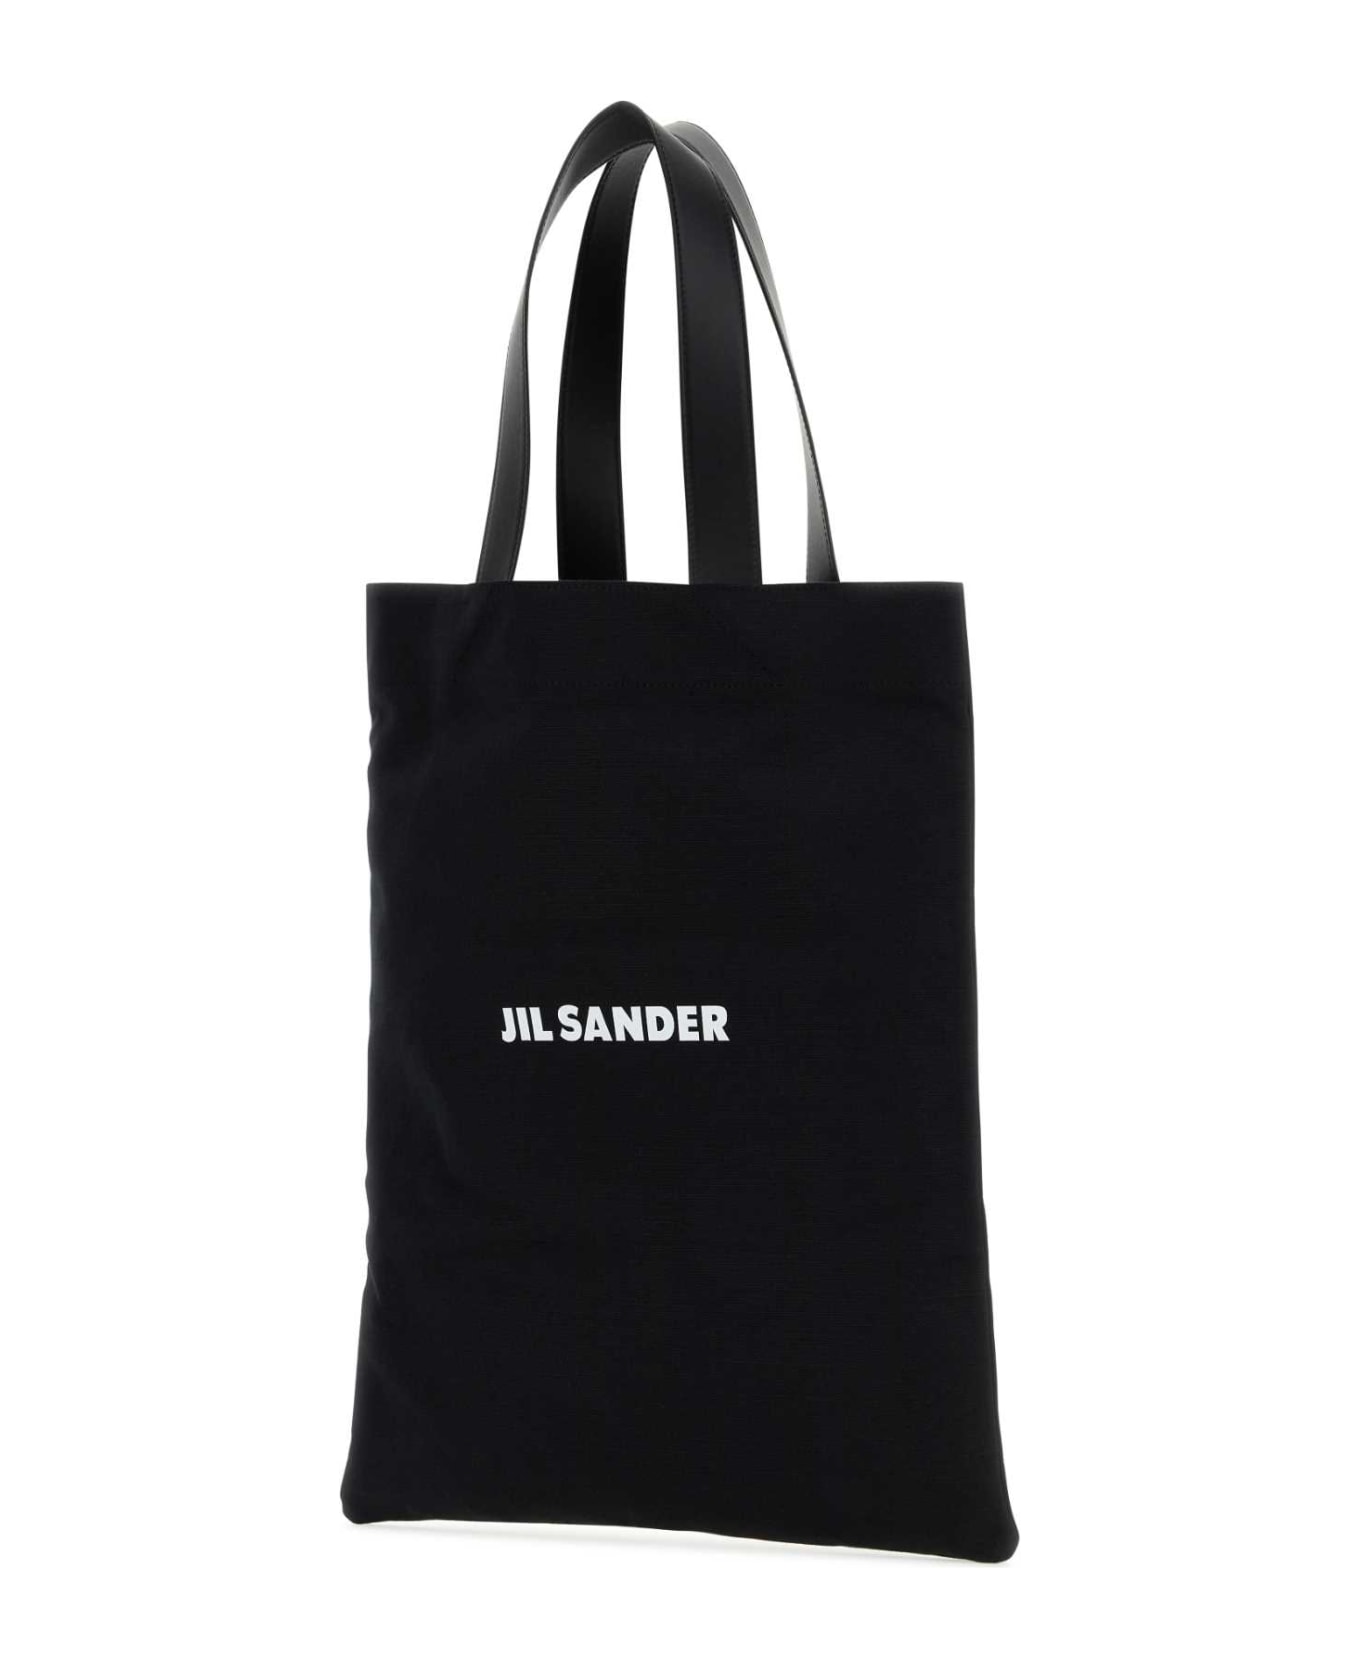 Jil Sander Black Canvas Medium Book Shopping Bag - 001 トートバッグ